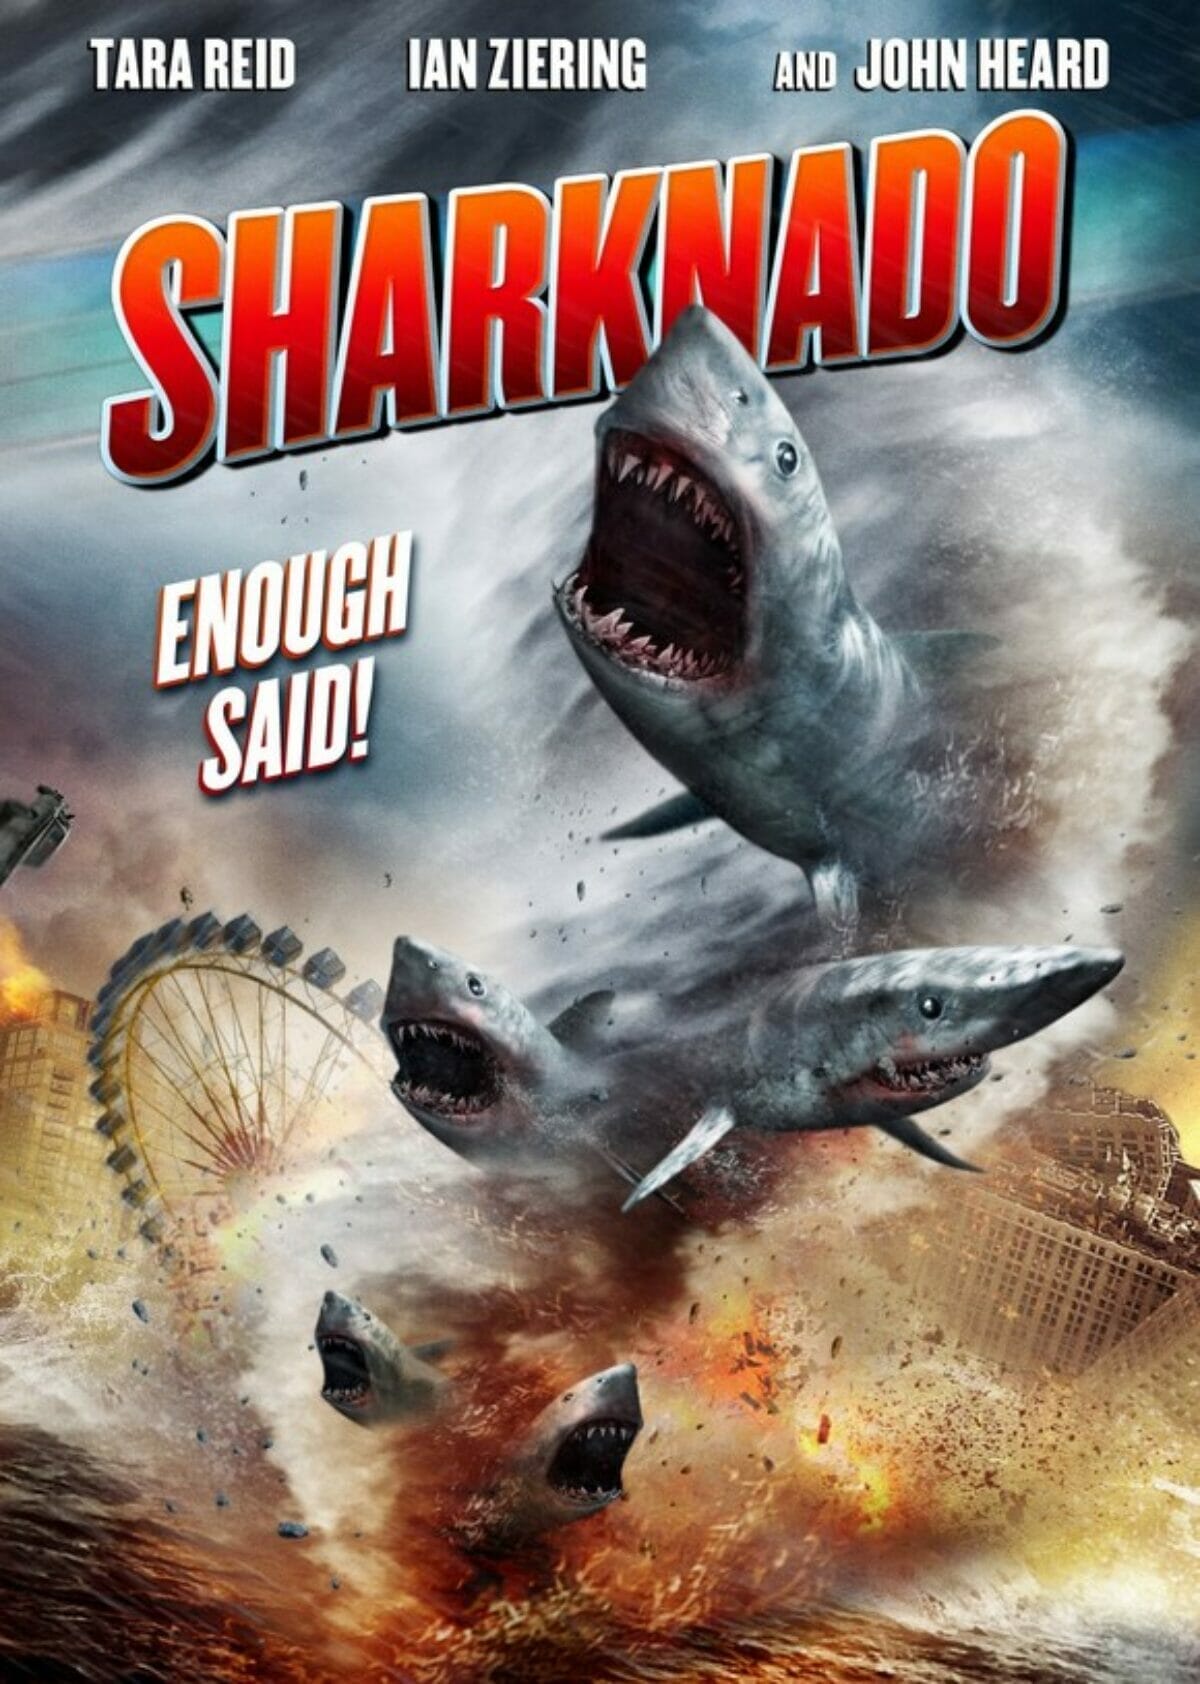 sharknado-affiche